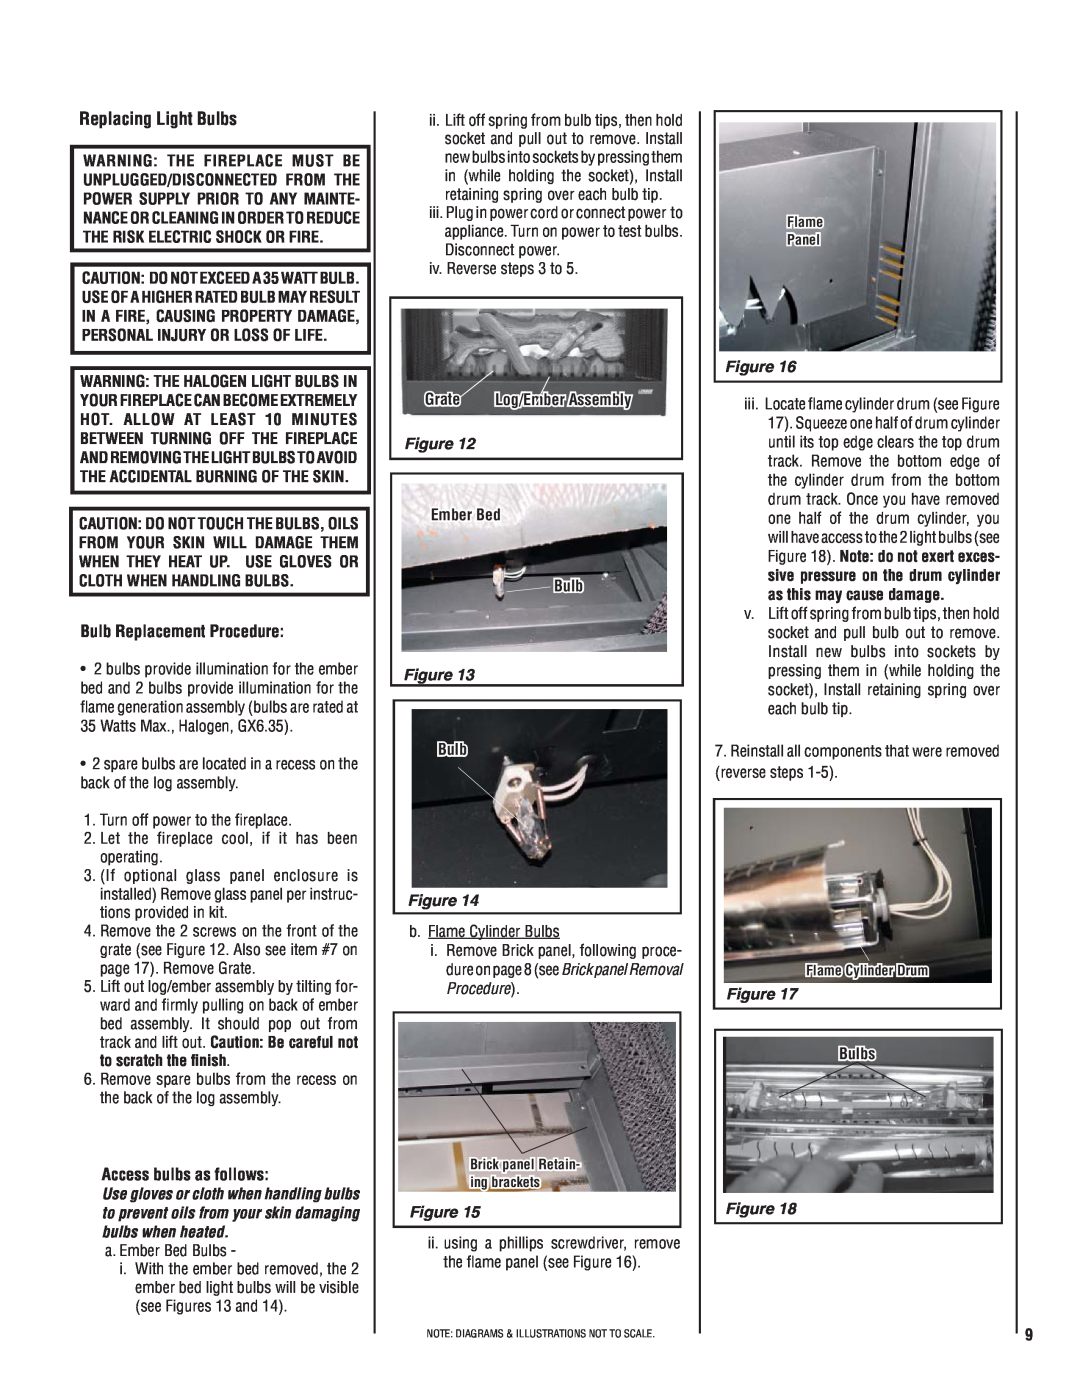 Lennox Hearth MPE-36R installation instructions Replacing Light Bulbs, Bulb Replacement Procedure, Access bulbs as follows 